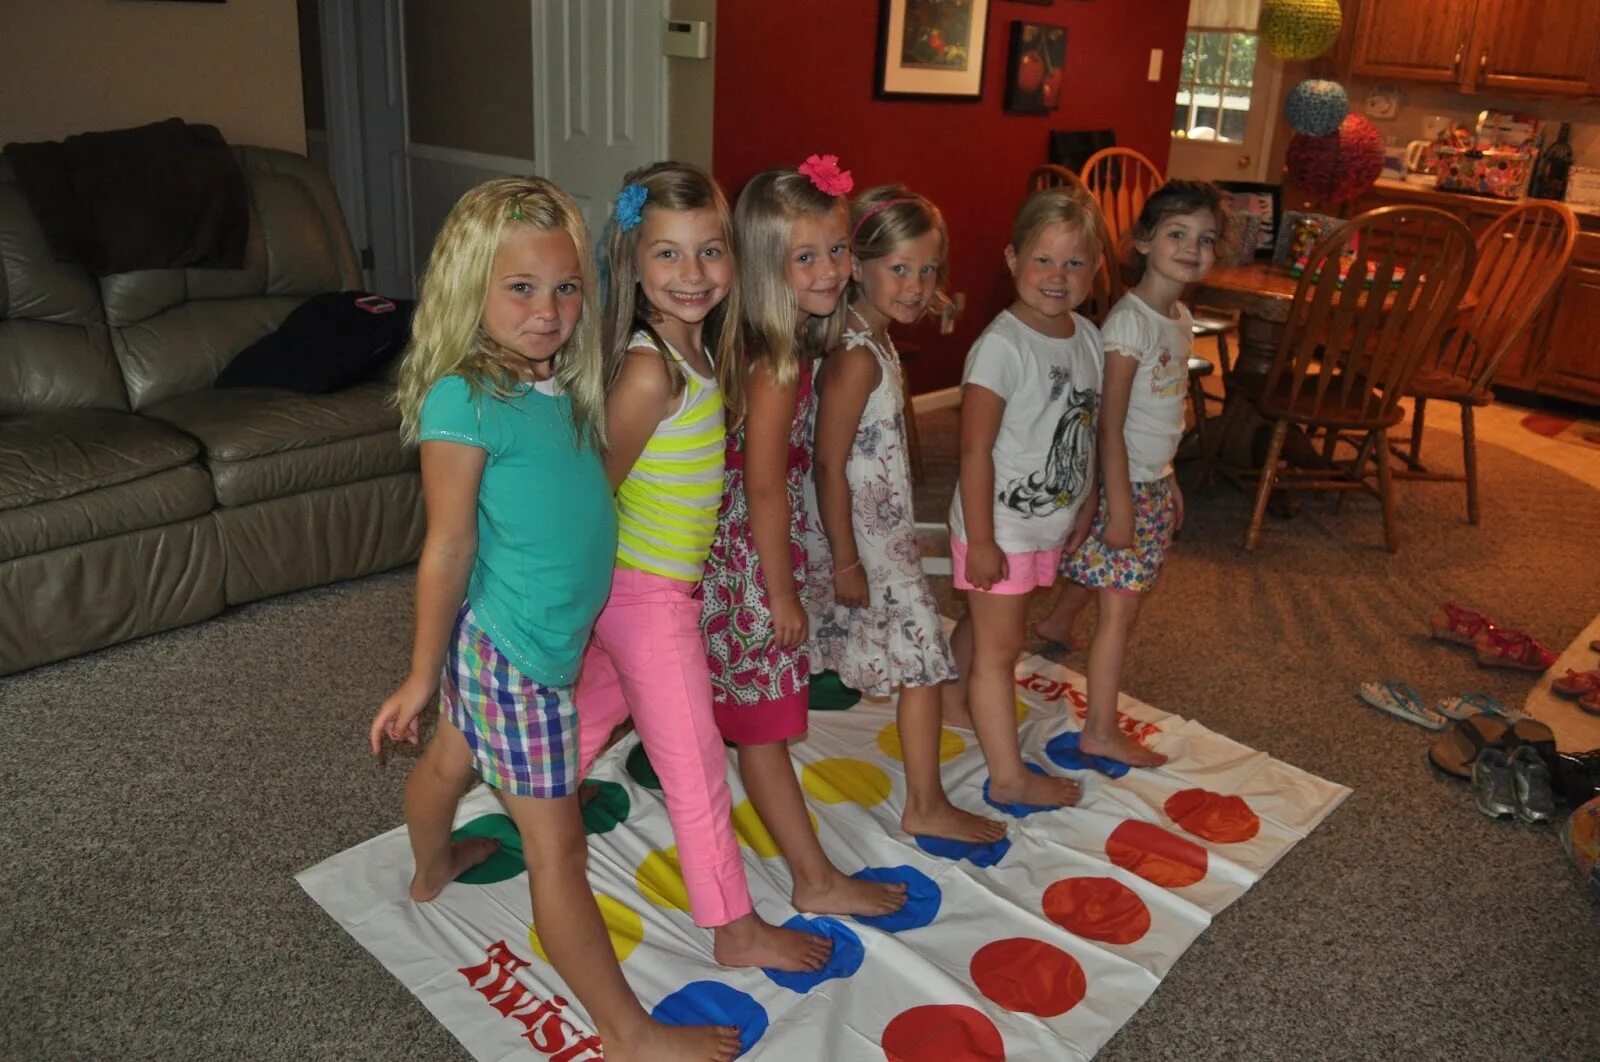 Little player. Little твистер. Twister Kids. Kids playing Twister. Девочки играют в твистер.